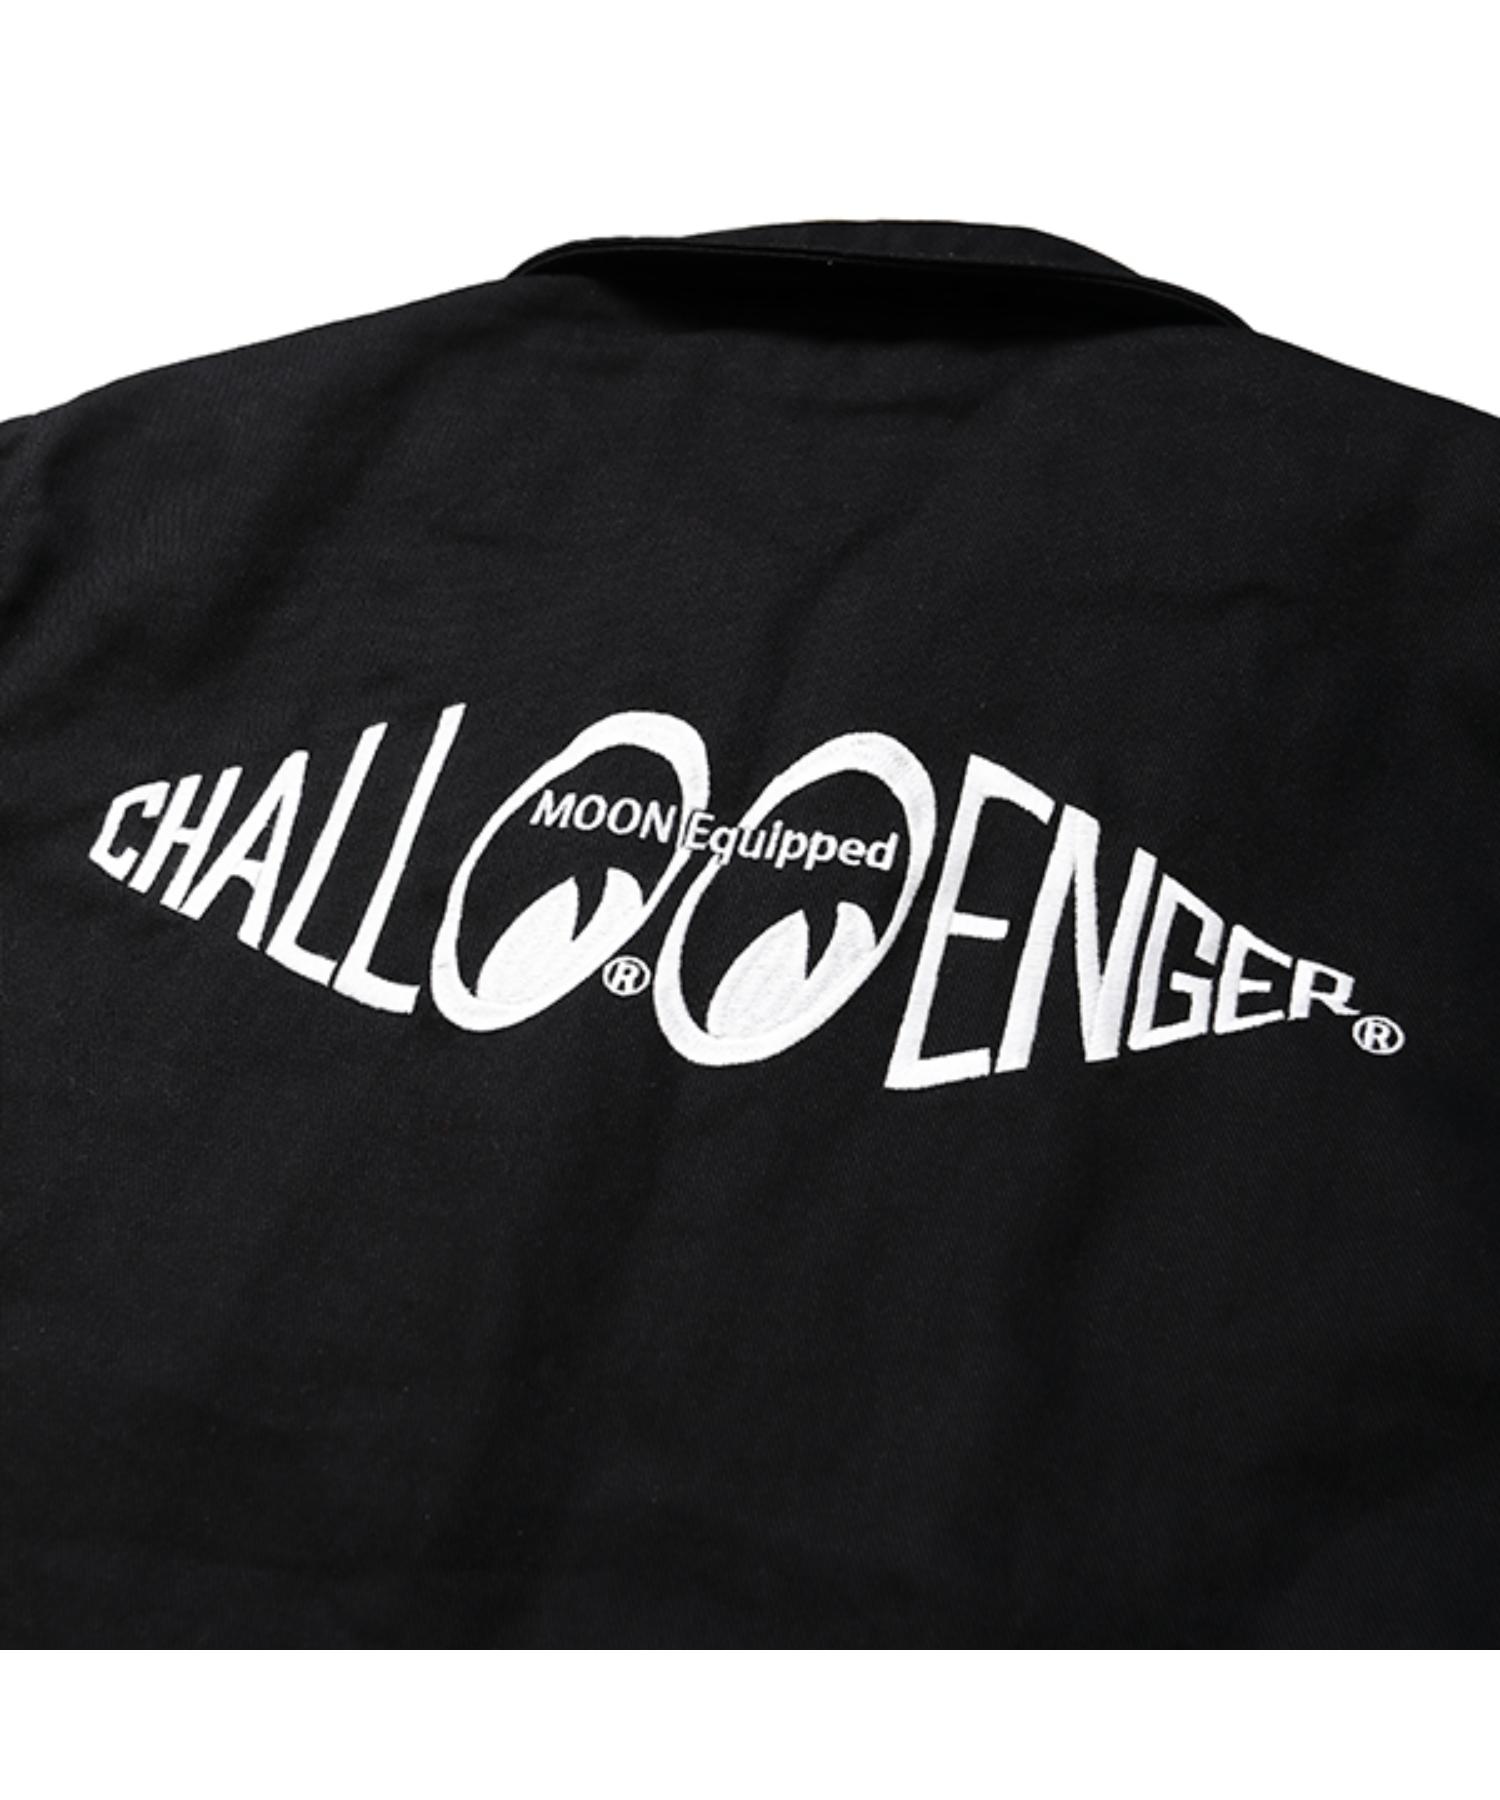 Challenger x MOON Equipped WORK JACKET素材コットン